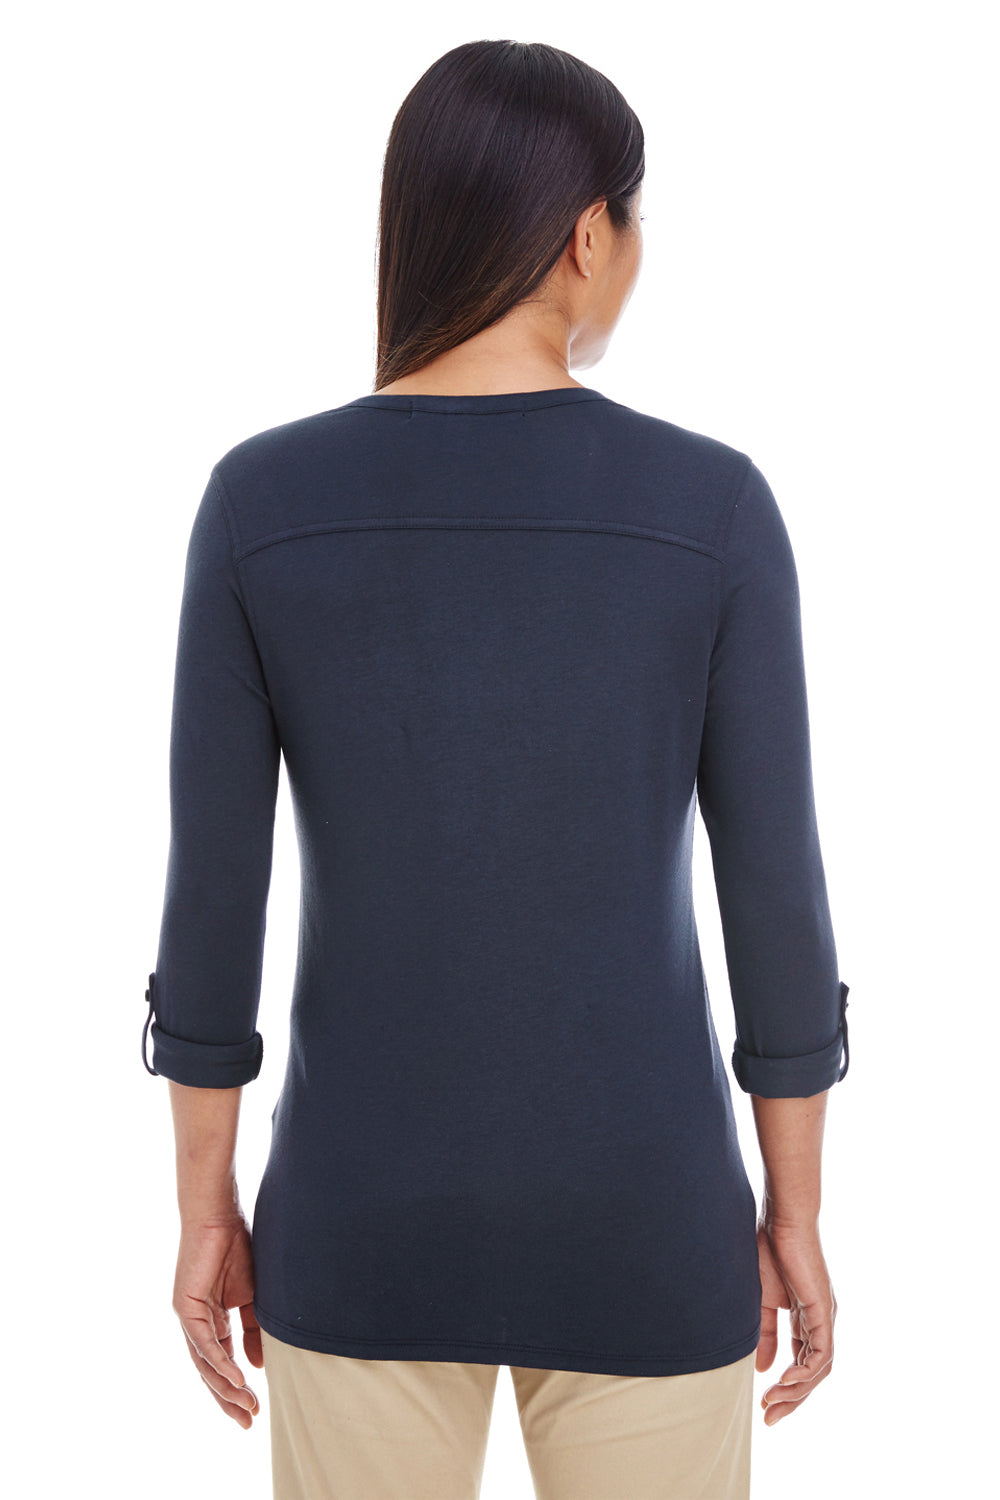 Devon & Jones DP186W Womens Perfect Fit Long Sleeve V-Neck T-Shirt Navy Blue Back